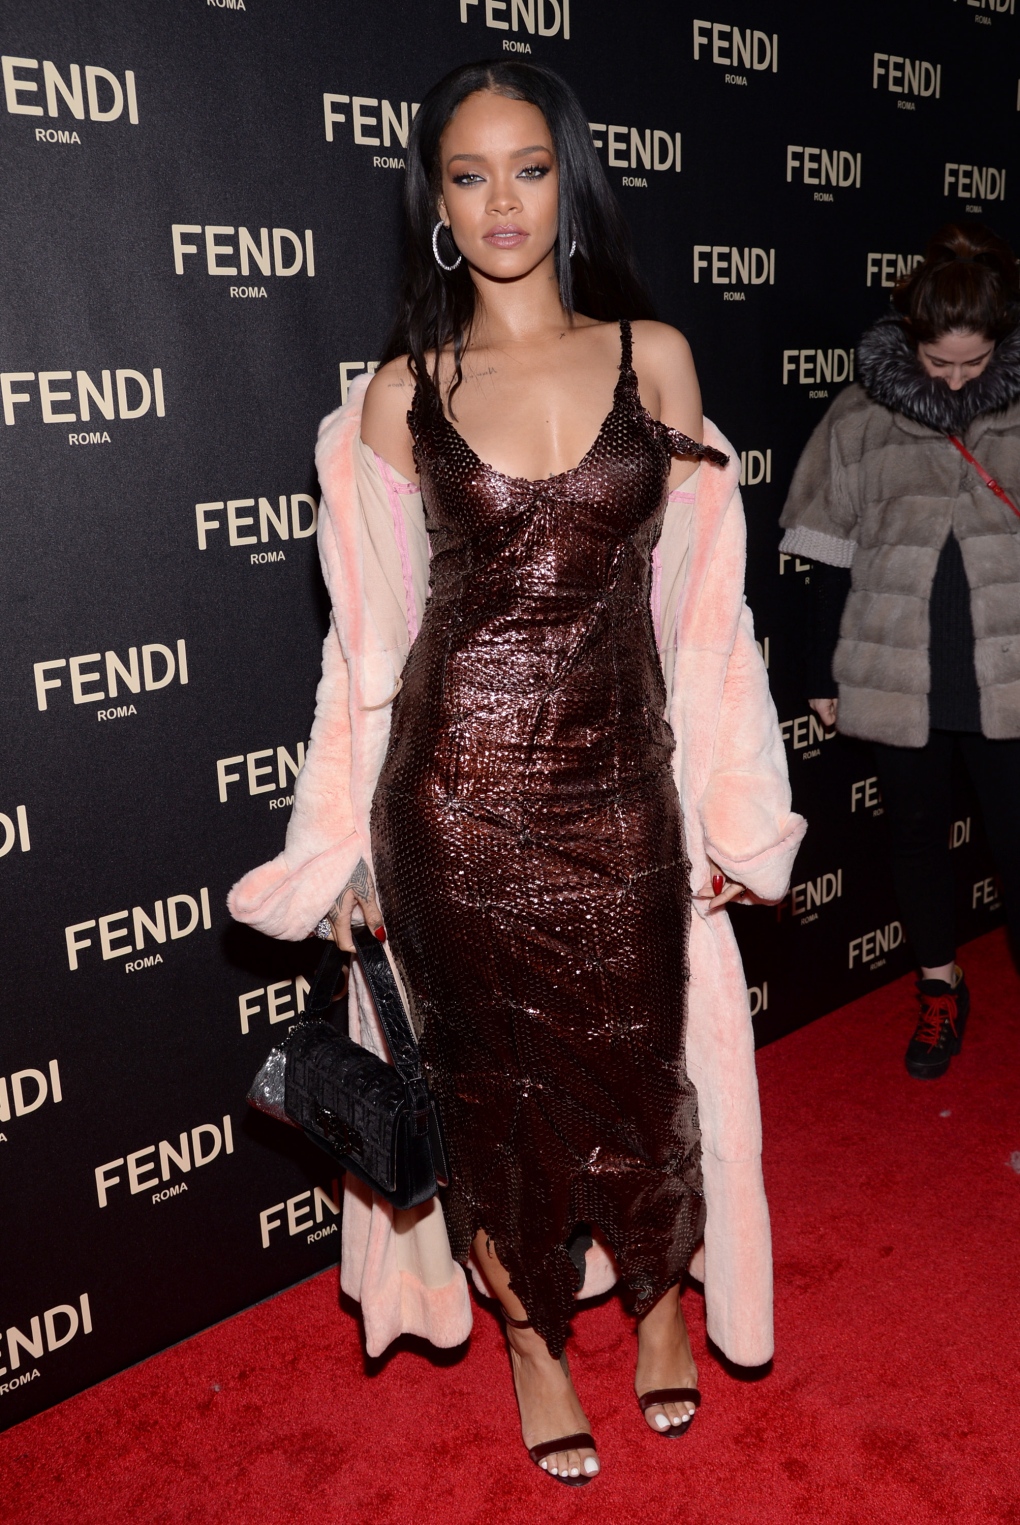 NY Fashion Week: Monique Lhuillier gets sultry, Rihanna's Fendi